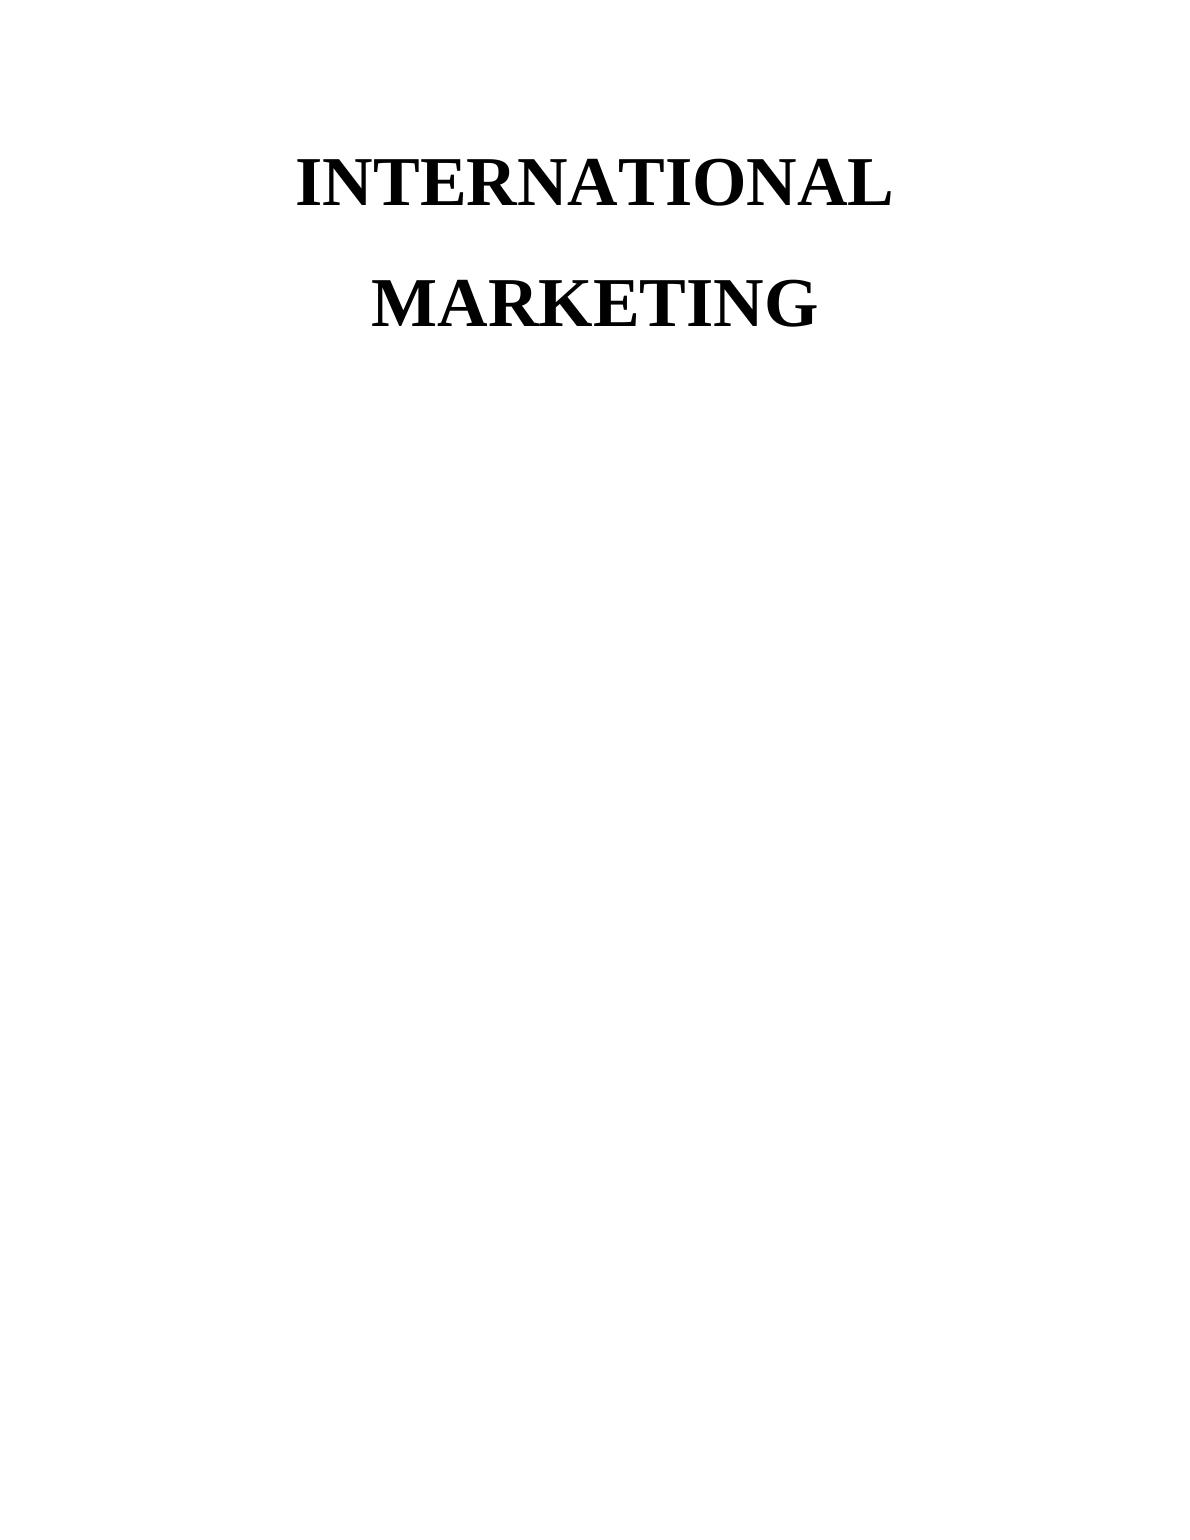 International Marketing Key Concepts- PDF_1